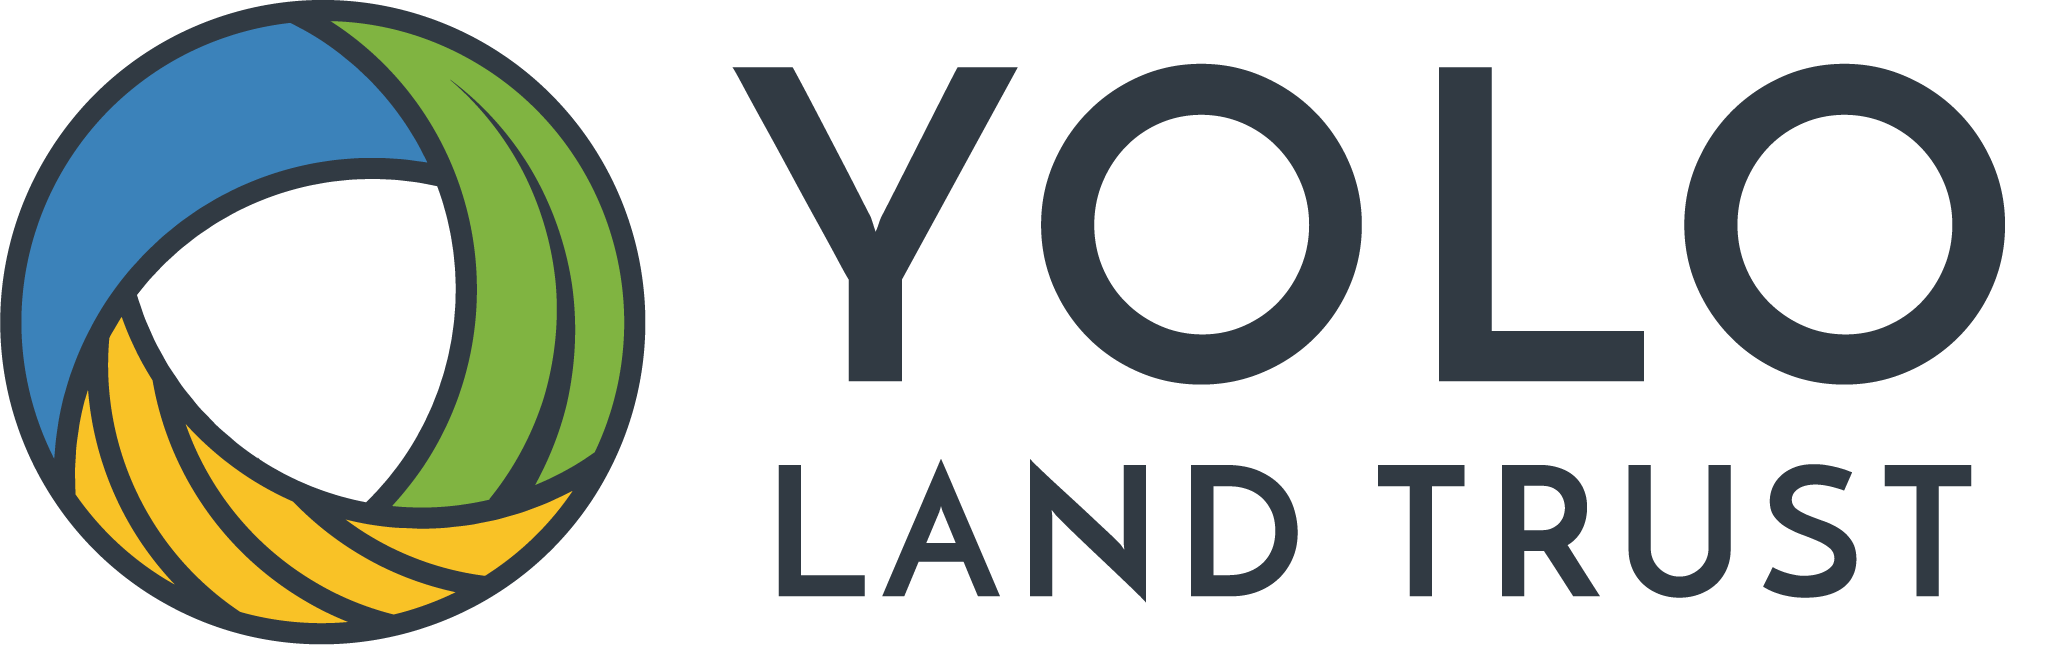 Yolo Land Trust Logo Main.png